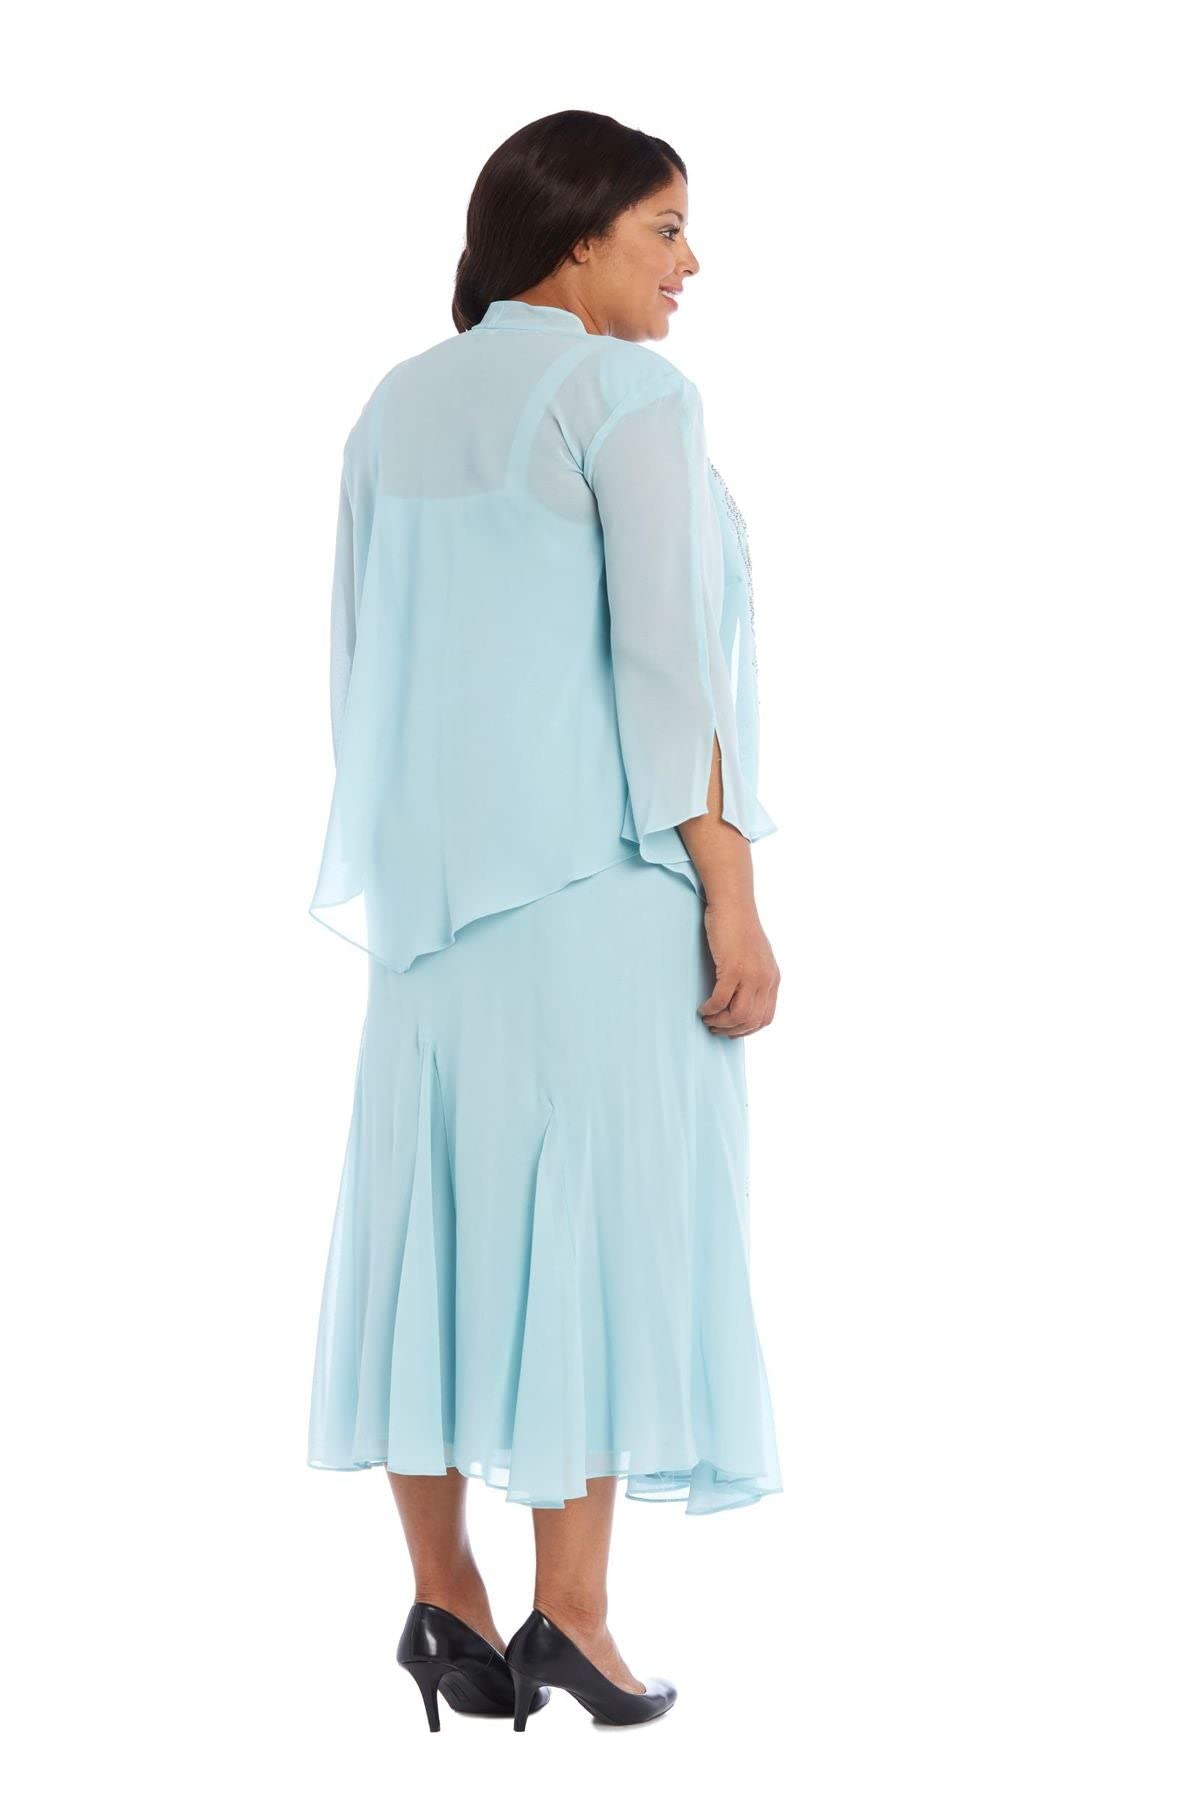 R&M Richards Women's Plus Size Beaded Chiffon Jacket Dress